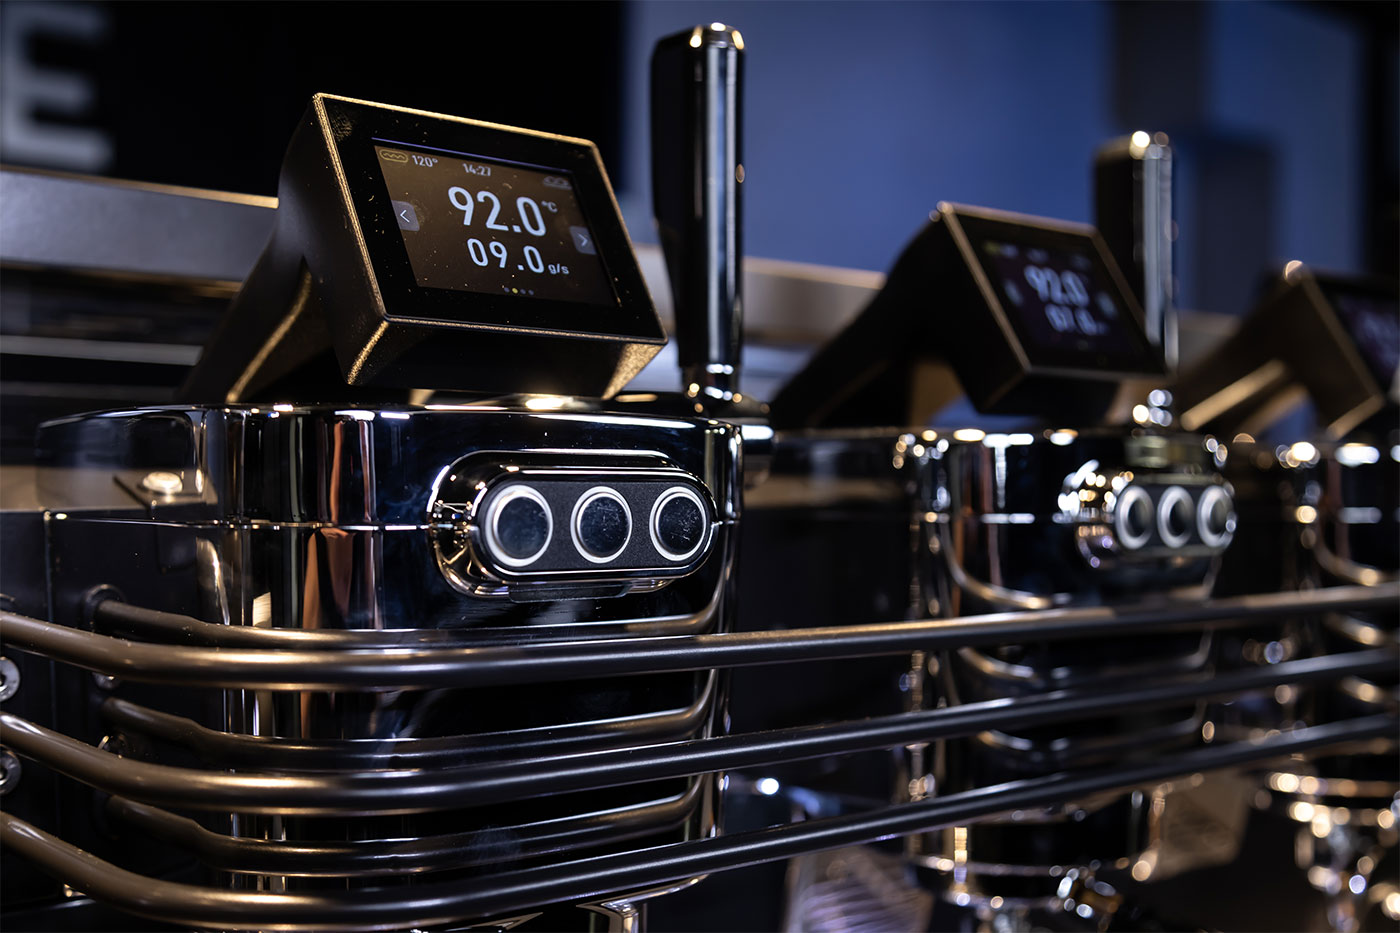 Zero barista 1 - Professional Espresso Machines